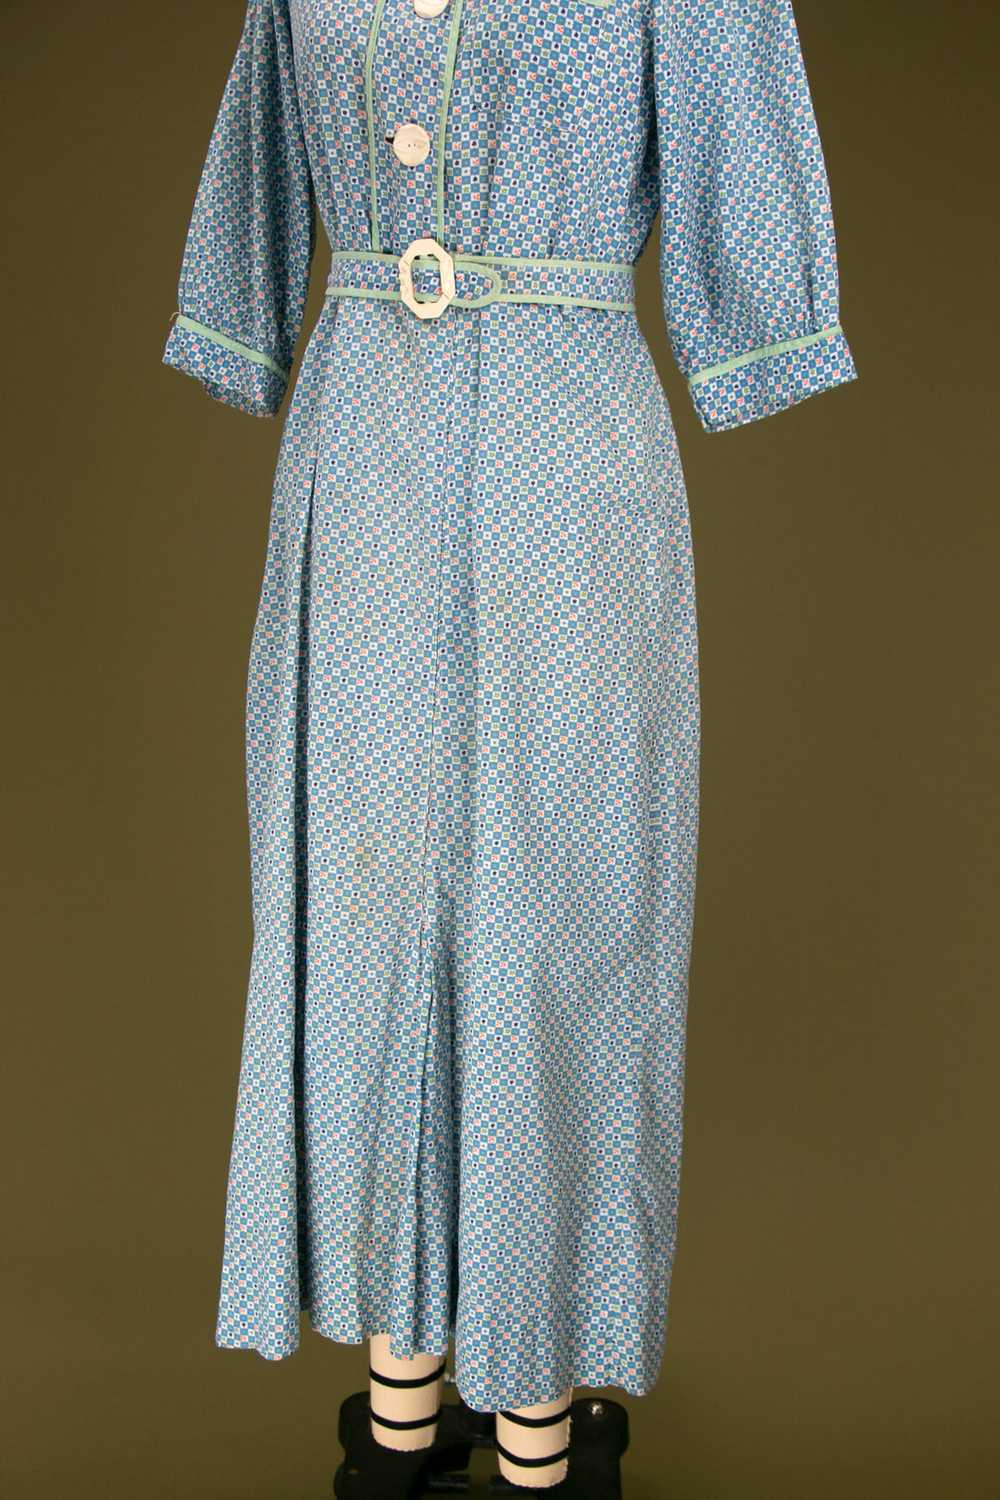 Vintage 1930's Depression Era Blue Farm Dress - image 4